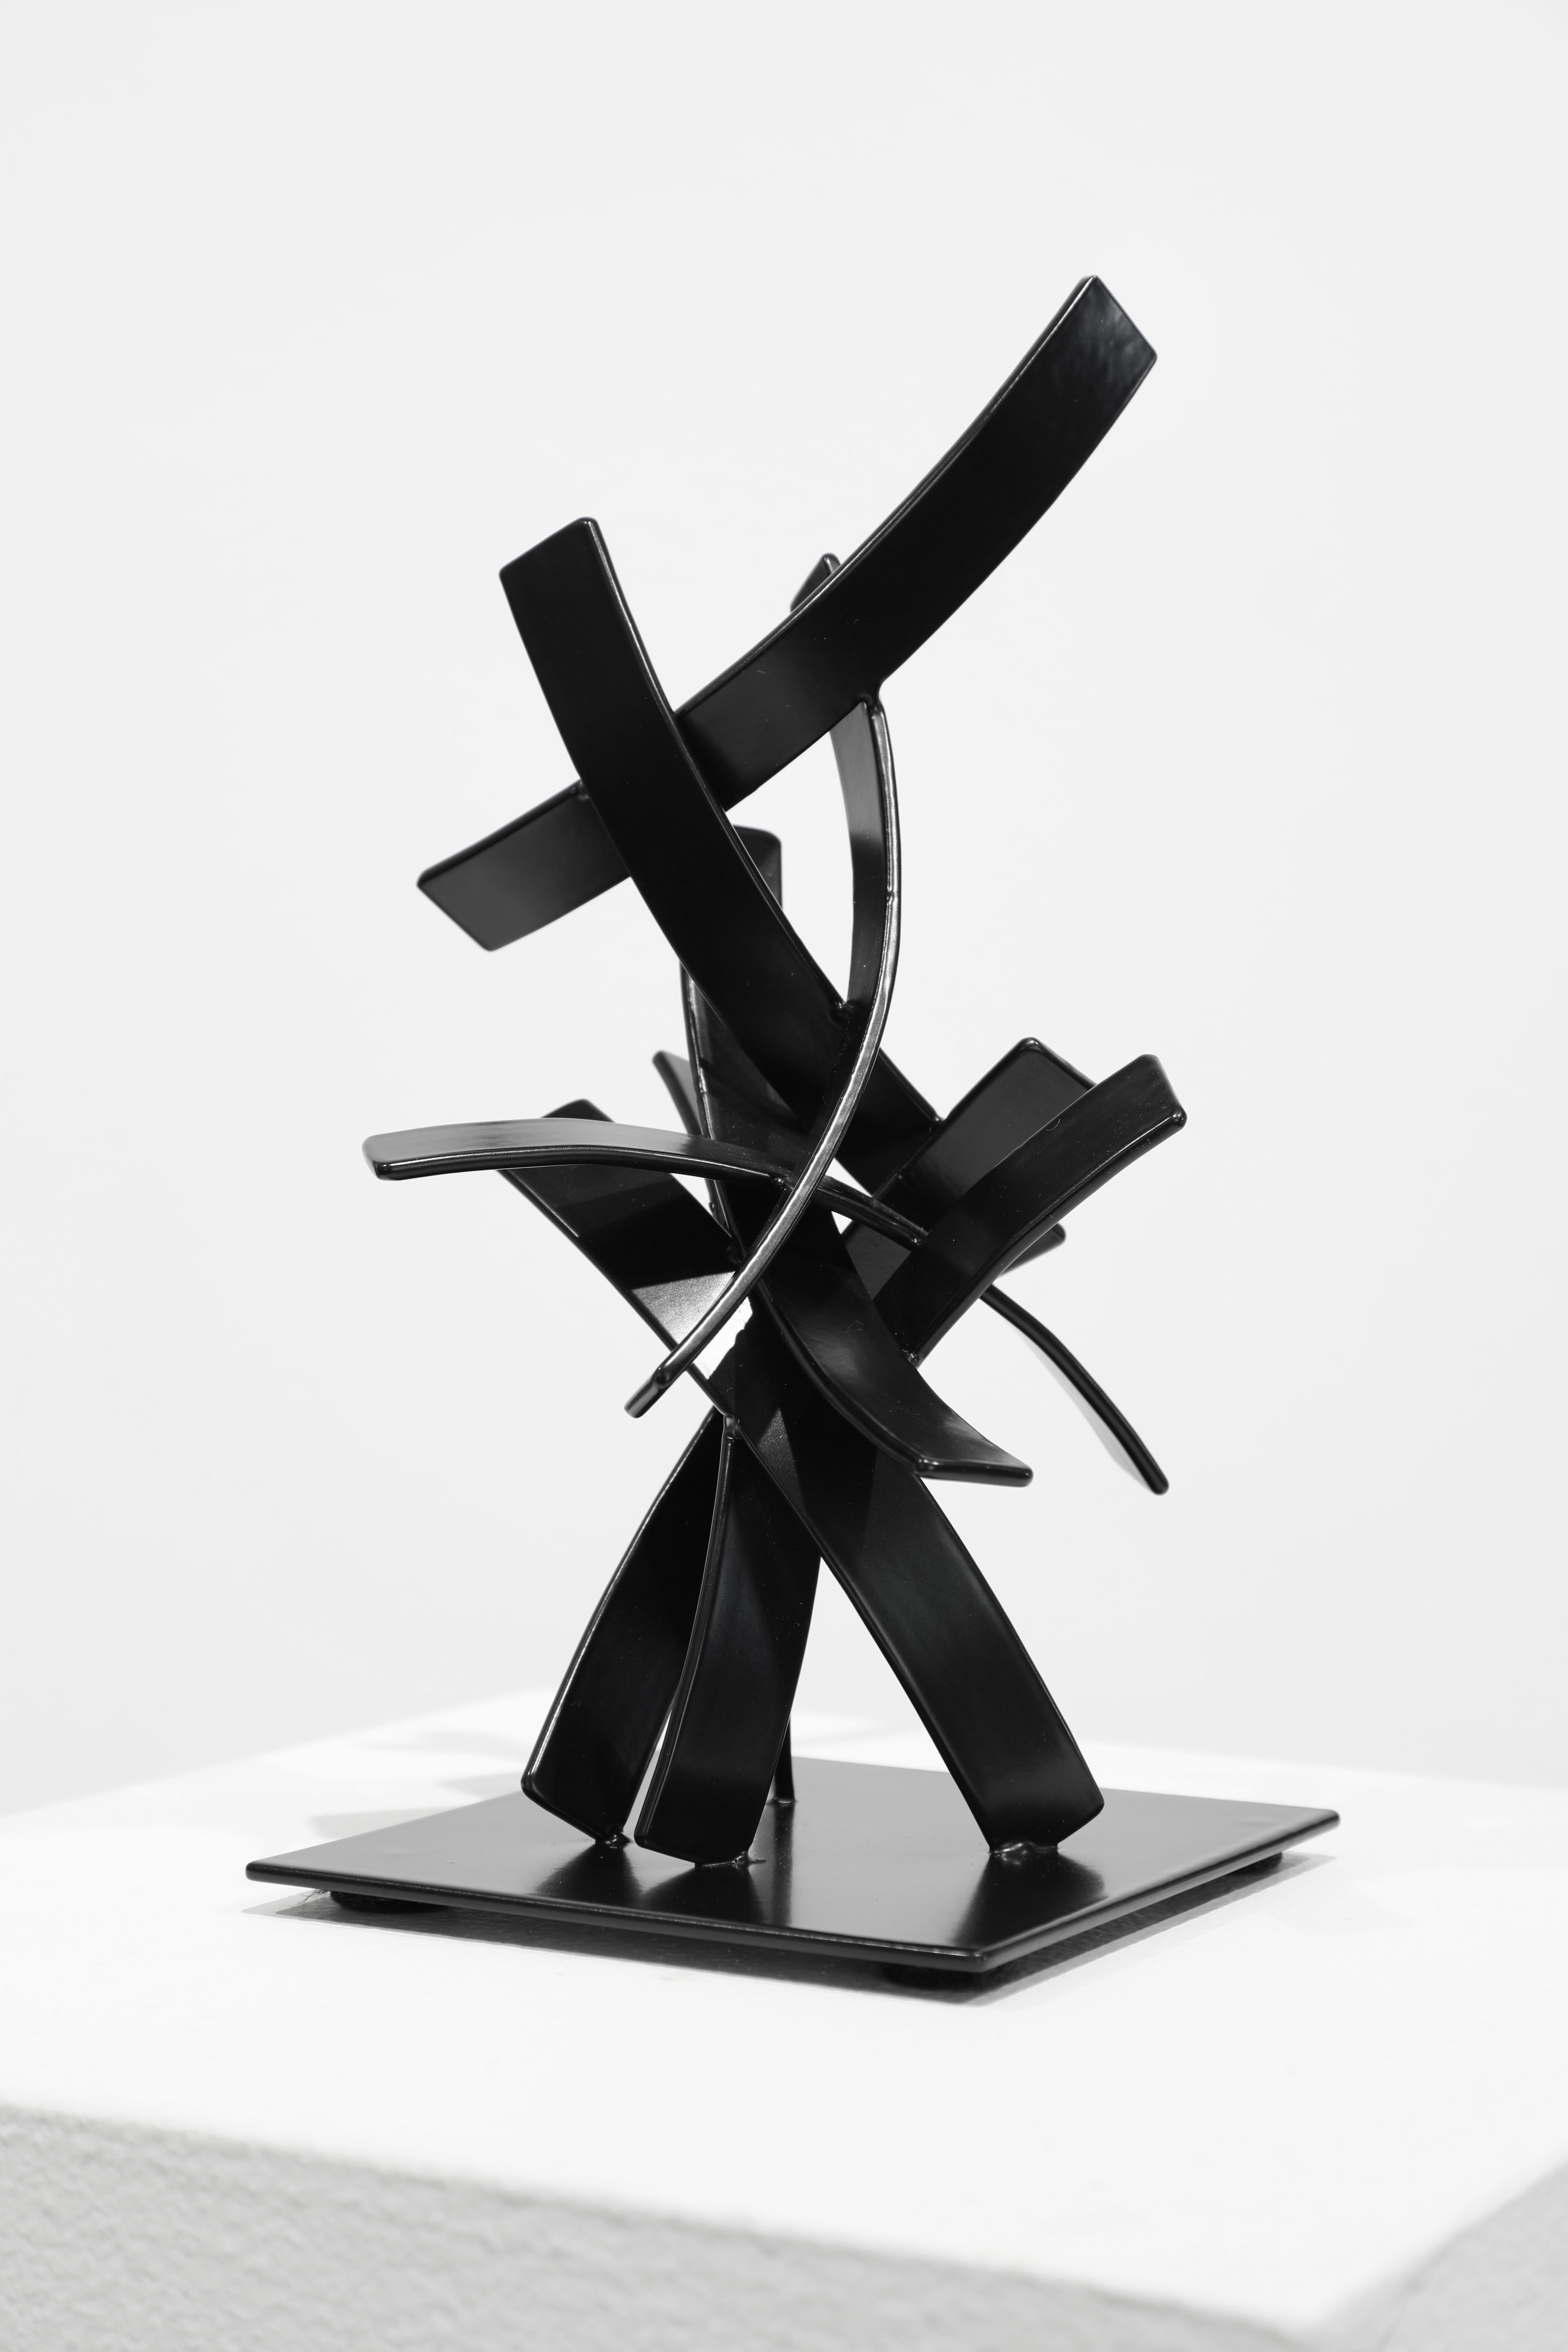 Upwell Study #2 - Abstract Sculpture by Matt Devine